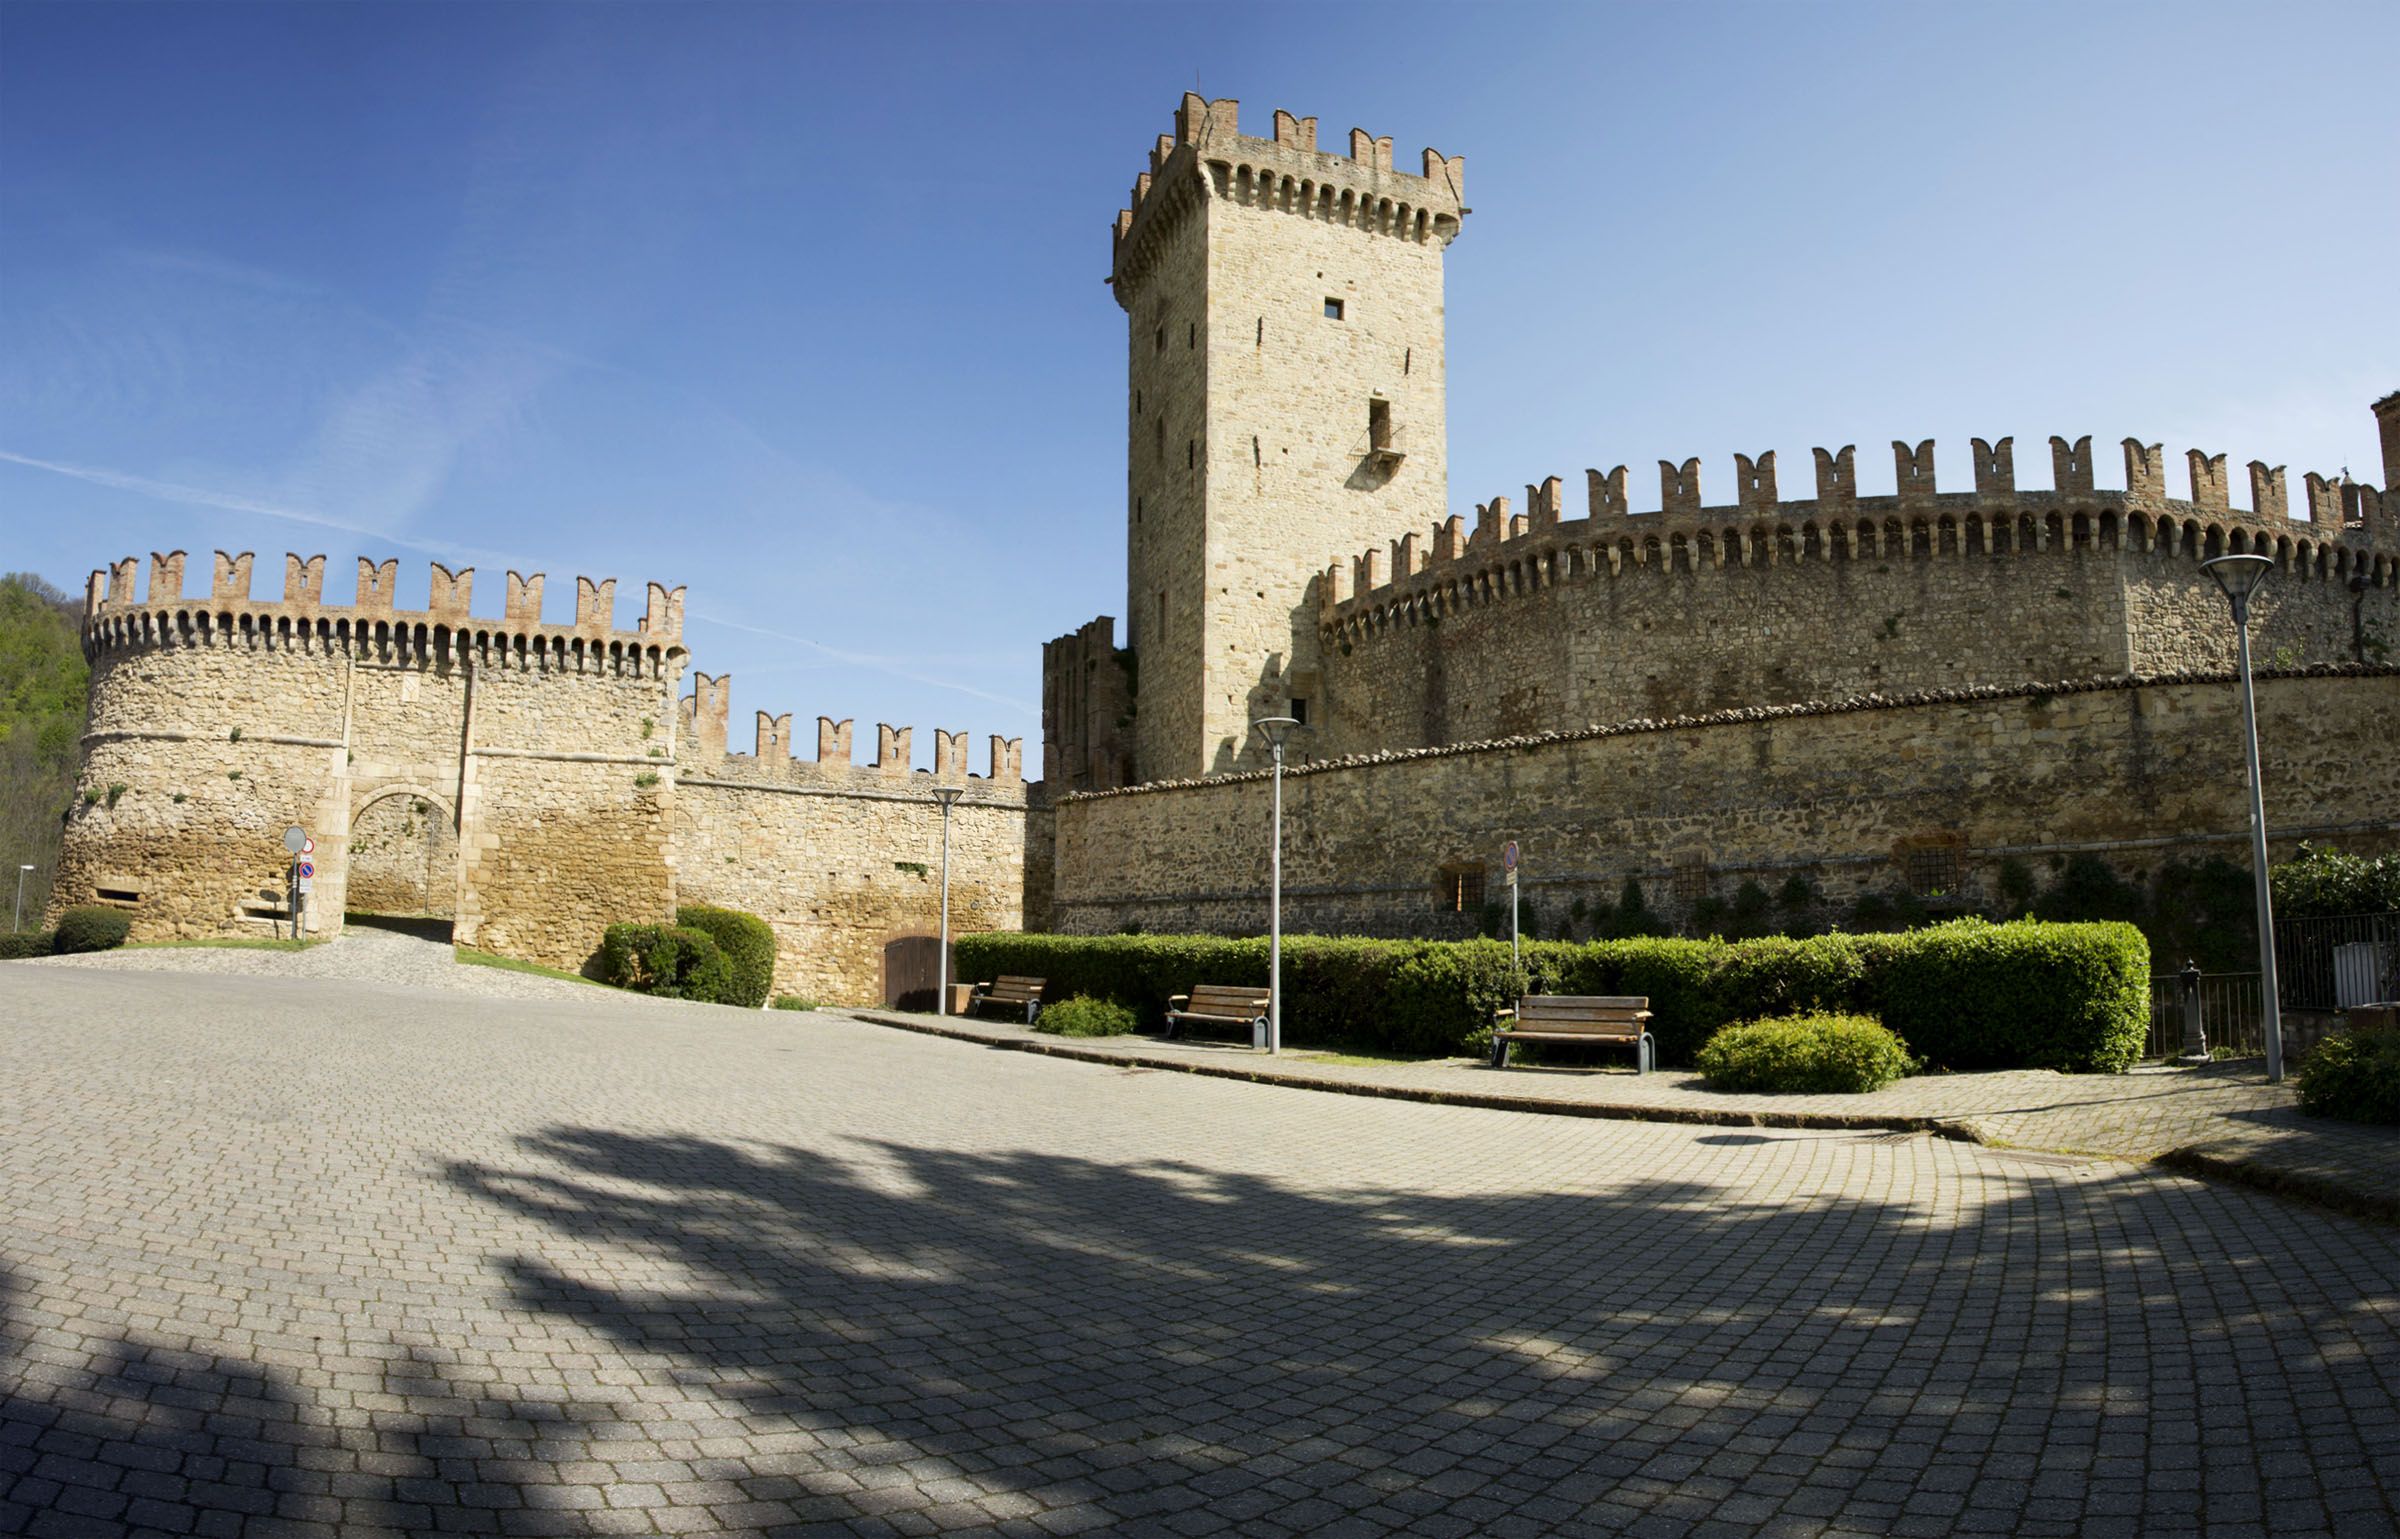 Vigoleno castle, Vernasca PC